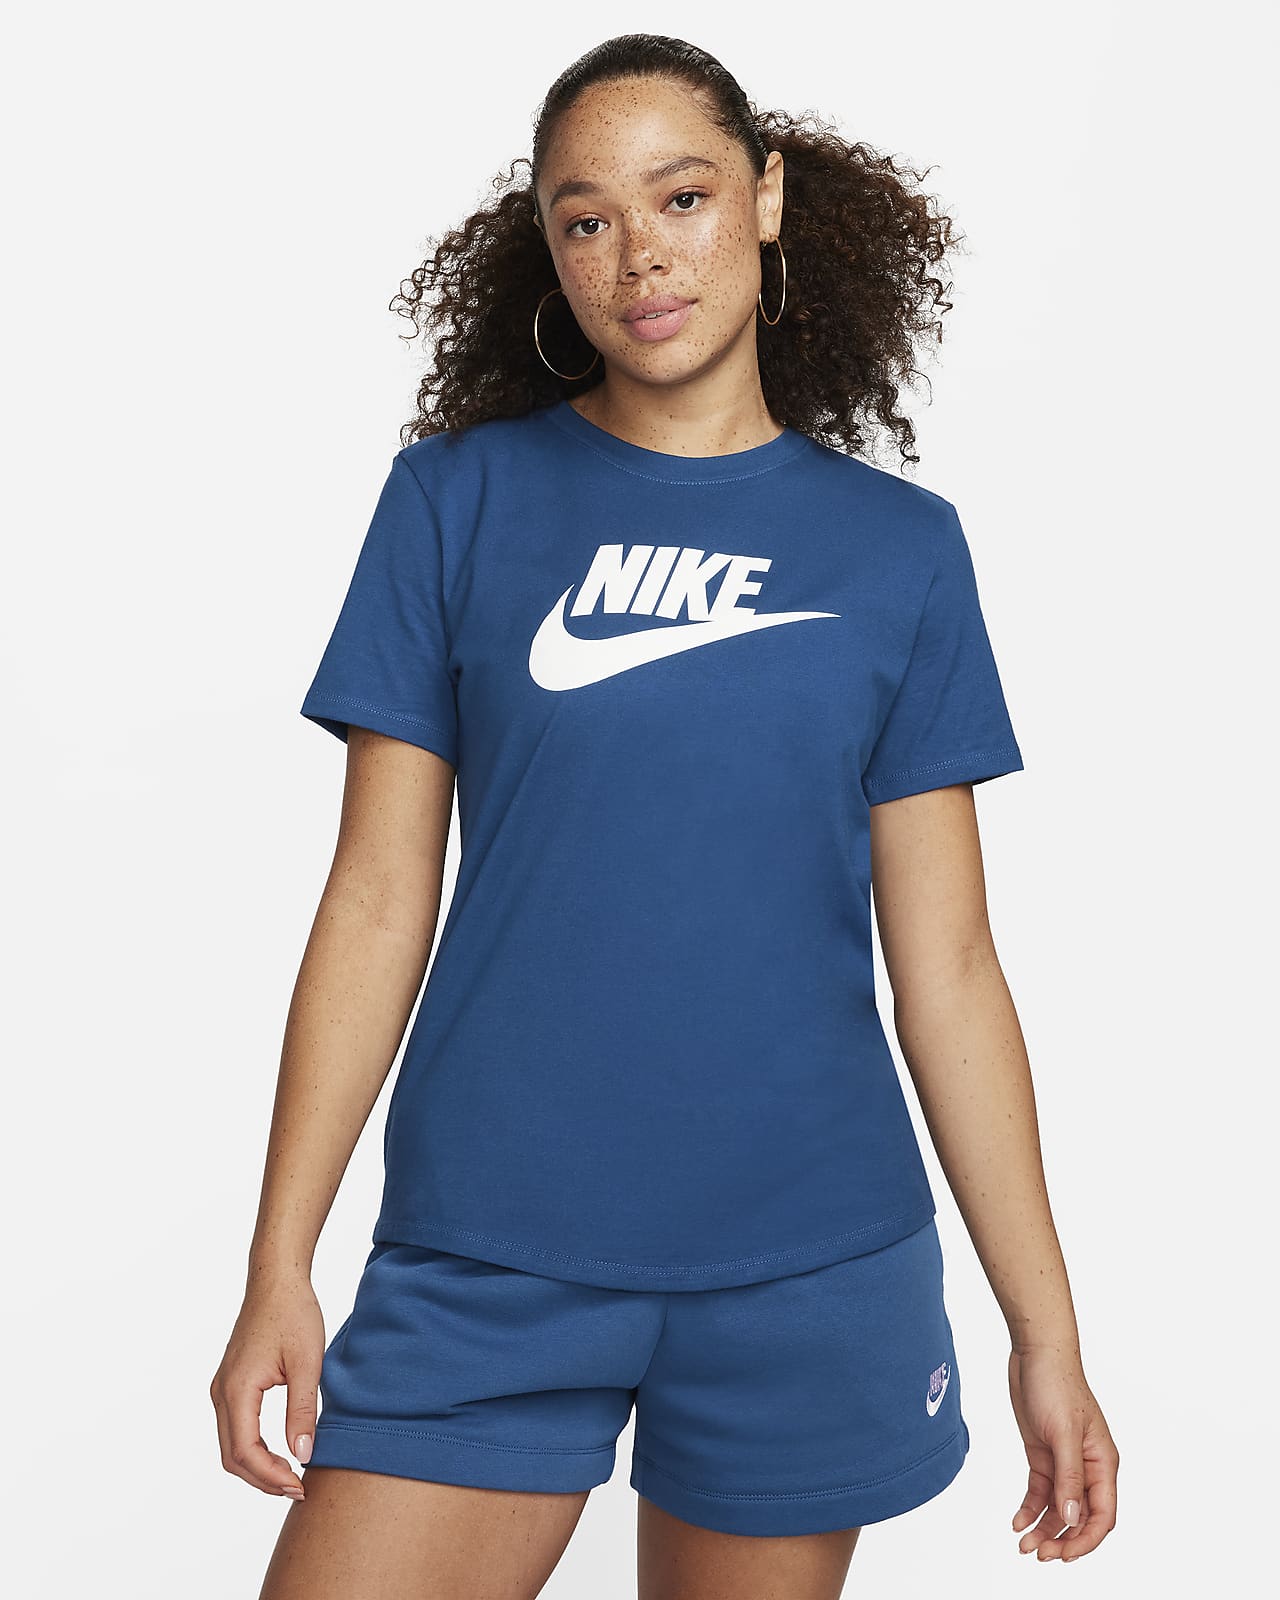 Comprar ropa deportiva para mujer. Nike MX